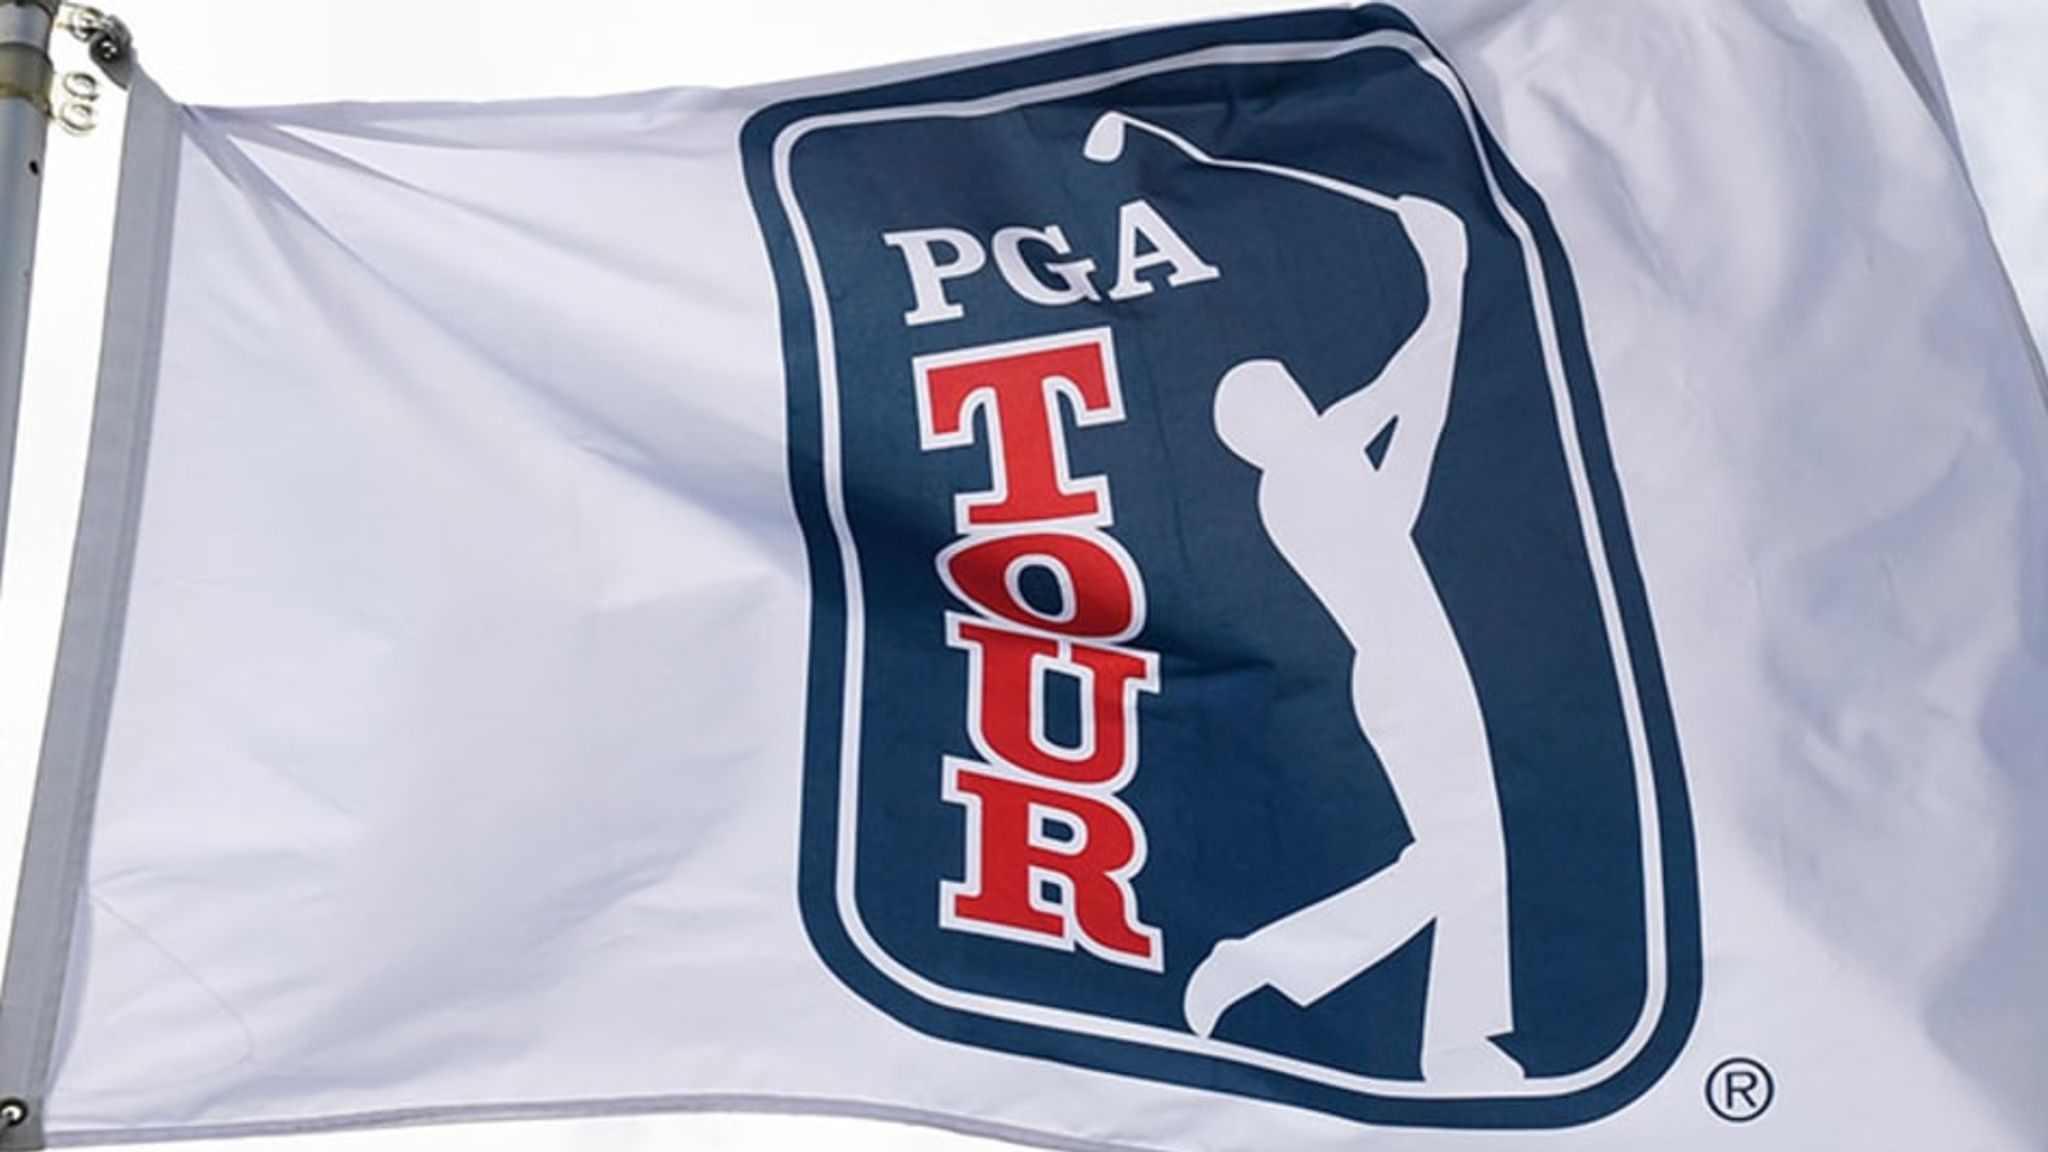 Sungjae Im crowned 2020 FedEx Cup champion as PGA Tour ends season